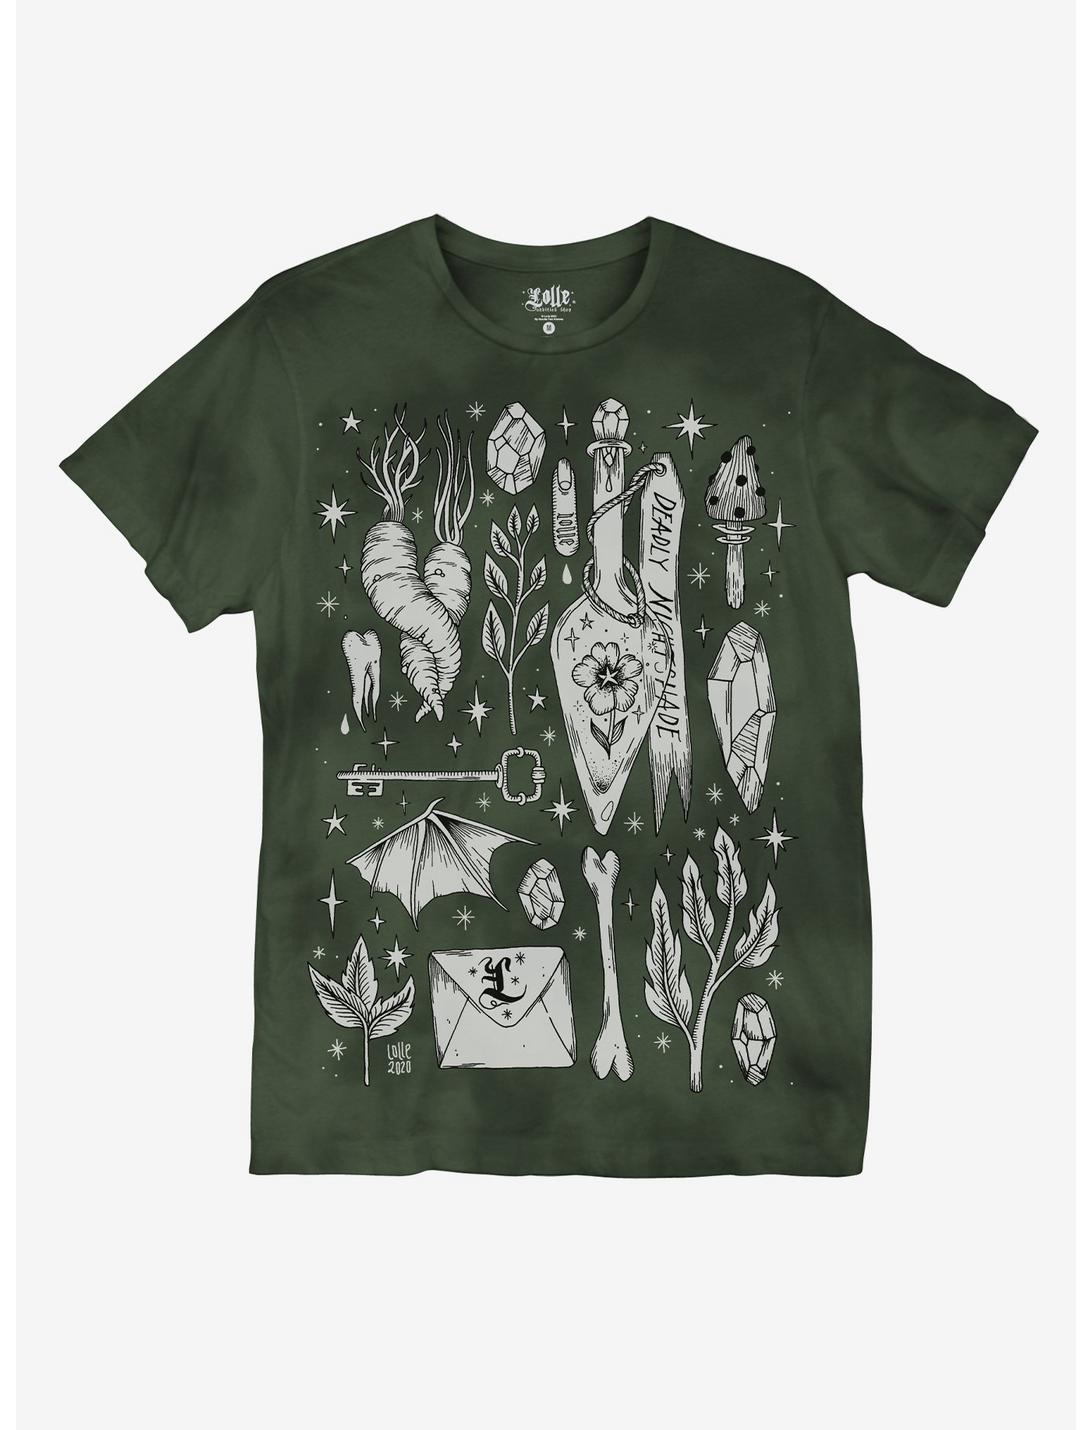 Mystical Items Green Wash Boyfriend Fit Girls T-Shirt by Lolle, MULTI, hi-res